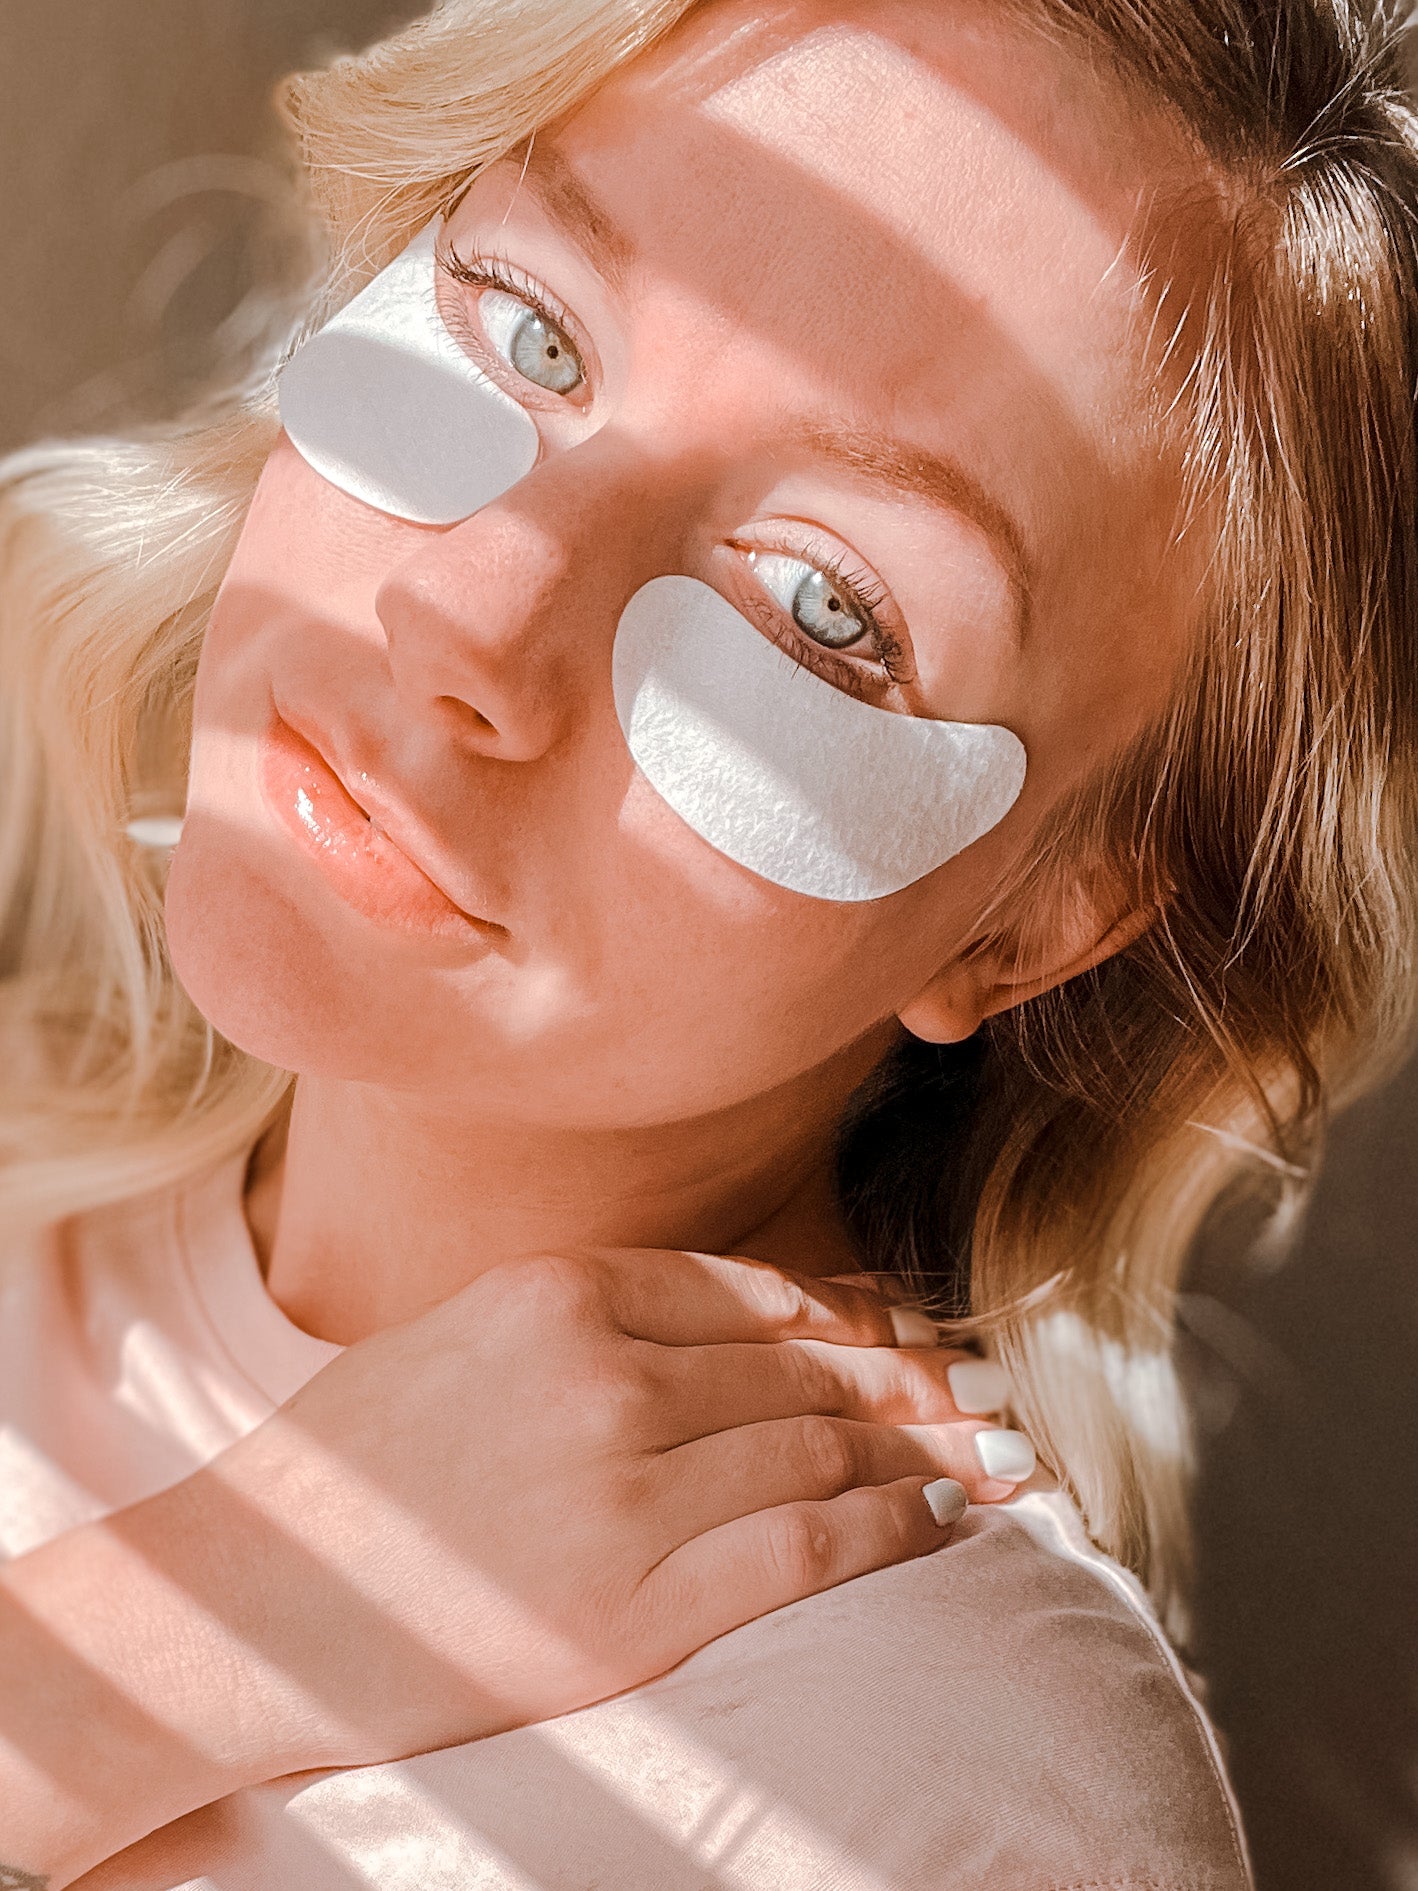 VIIcode Oxygen Skincare Under Eye Mask For All Night Repair - Single Pair